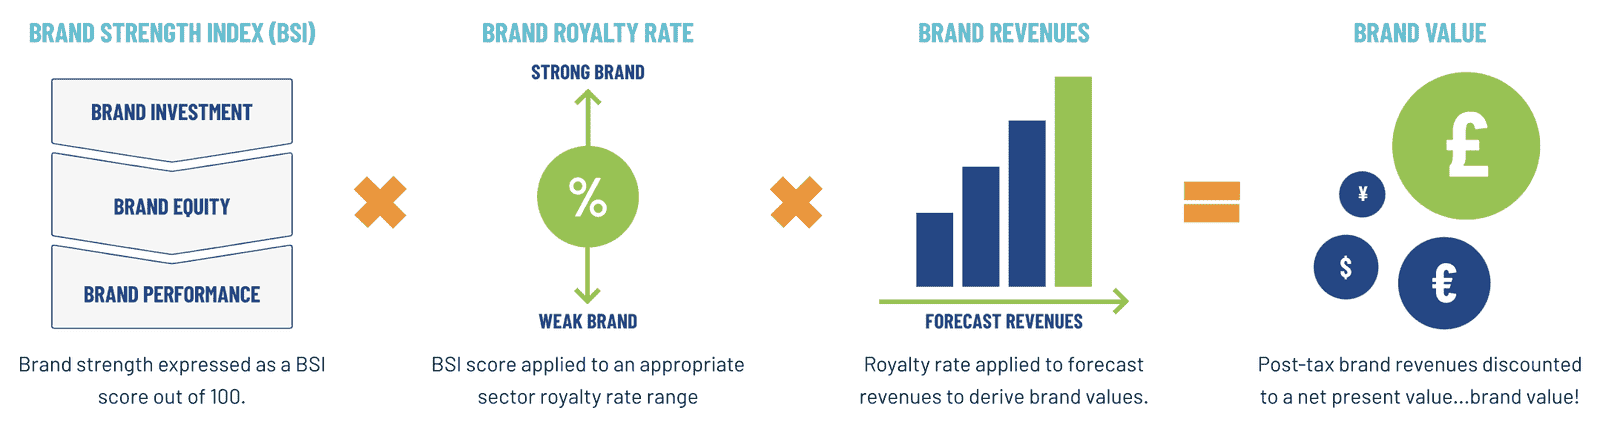 Brand Finance - Royalty Relief Methodology